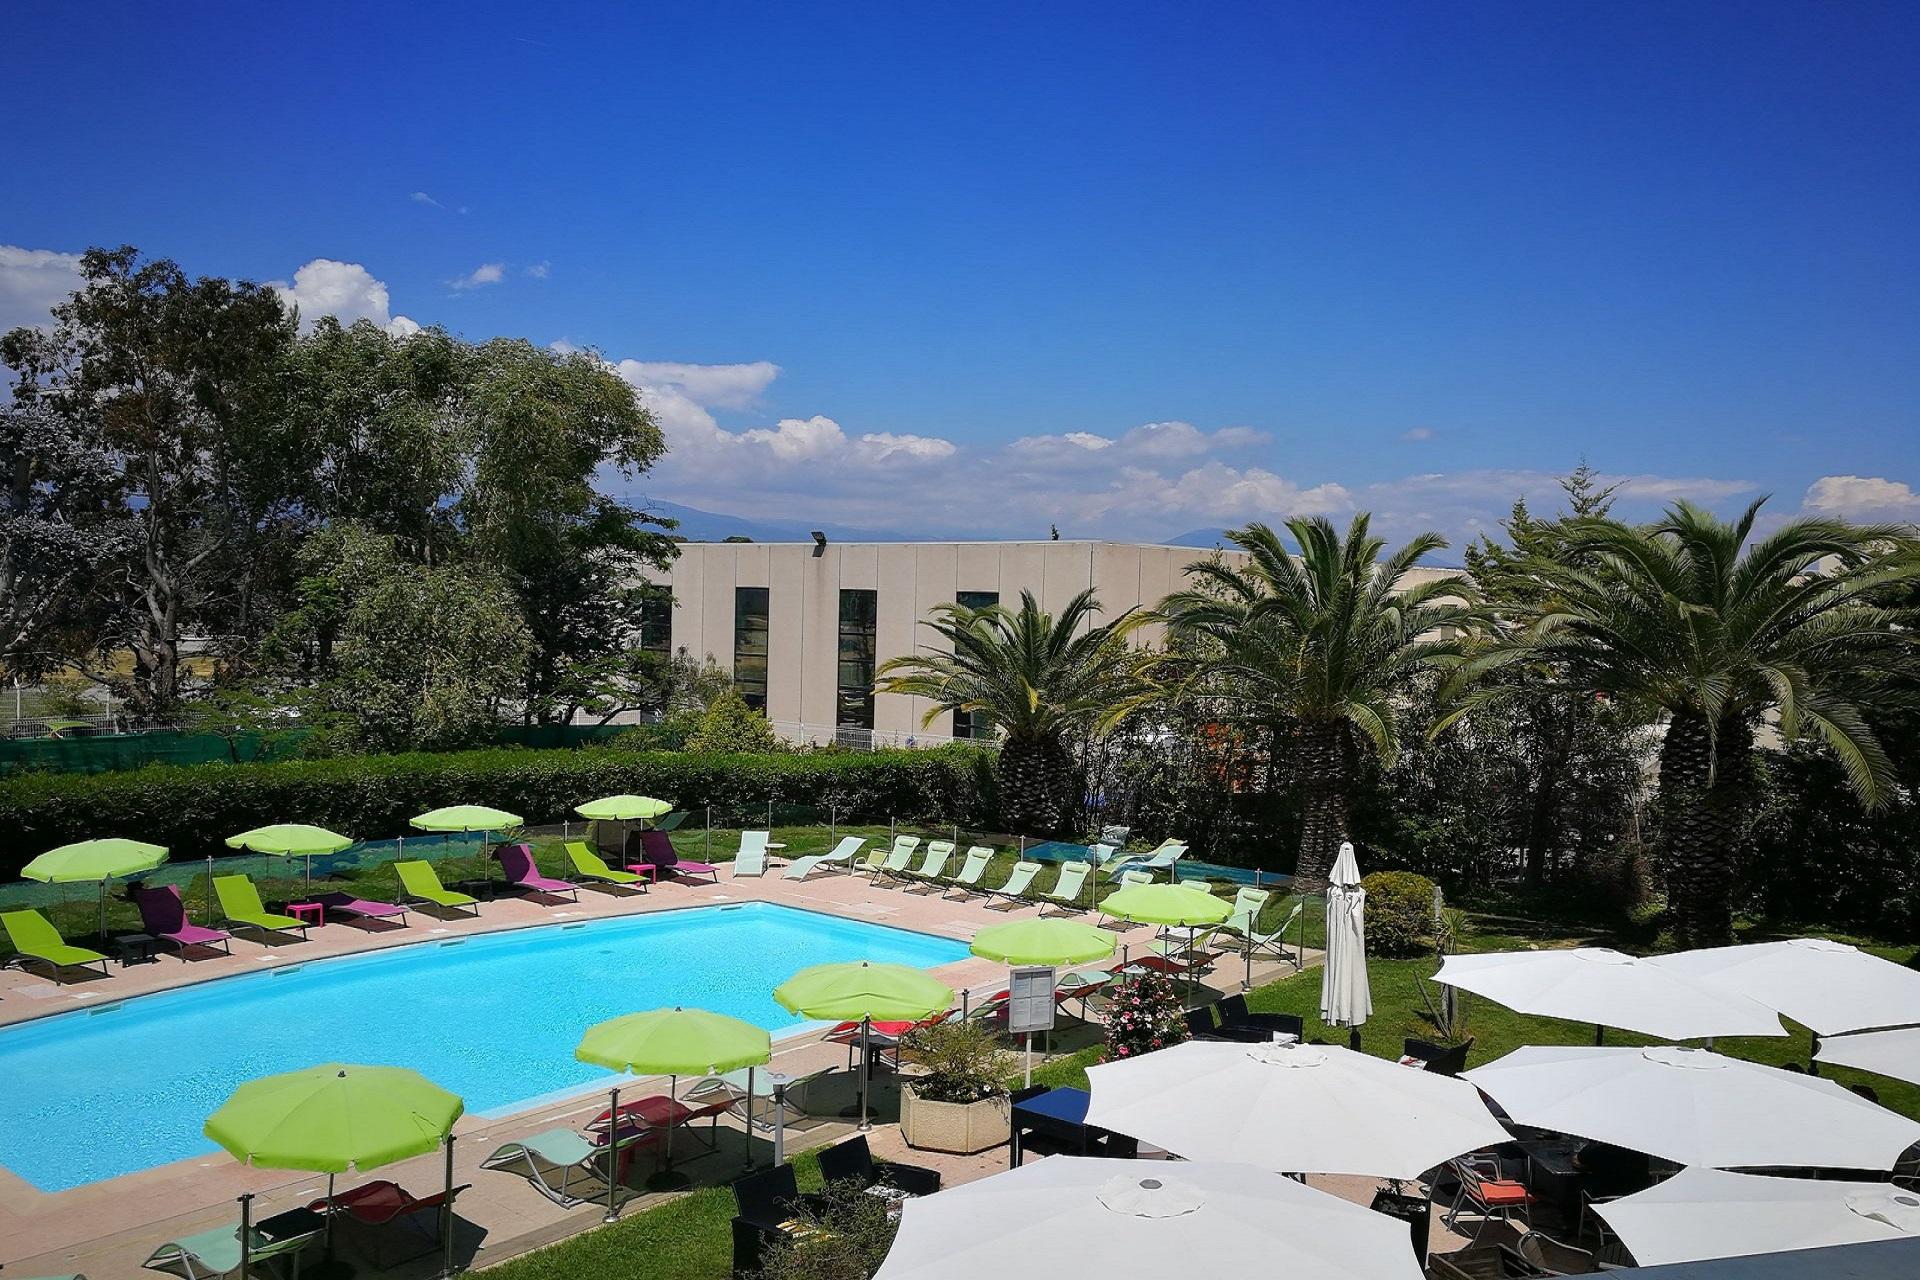 Hotel-Mercure-Cannes-Mandelieu-riviera-cote-azur-piscine-seminaires-de-caractere